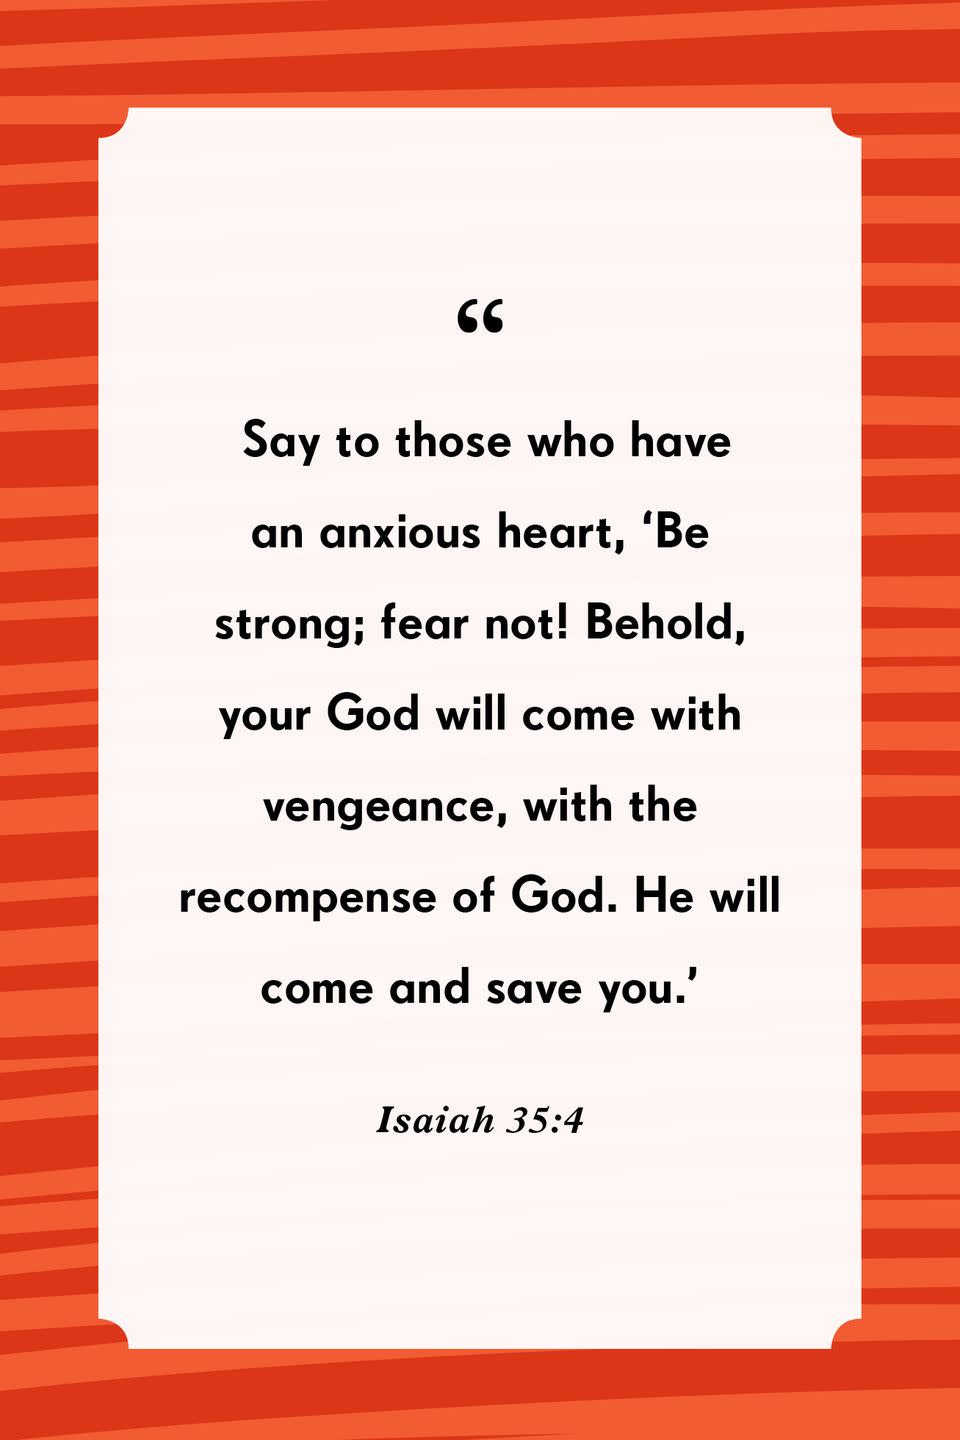 15) Isaiah 35:4